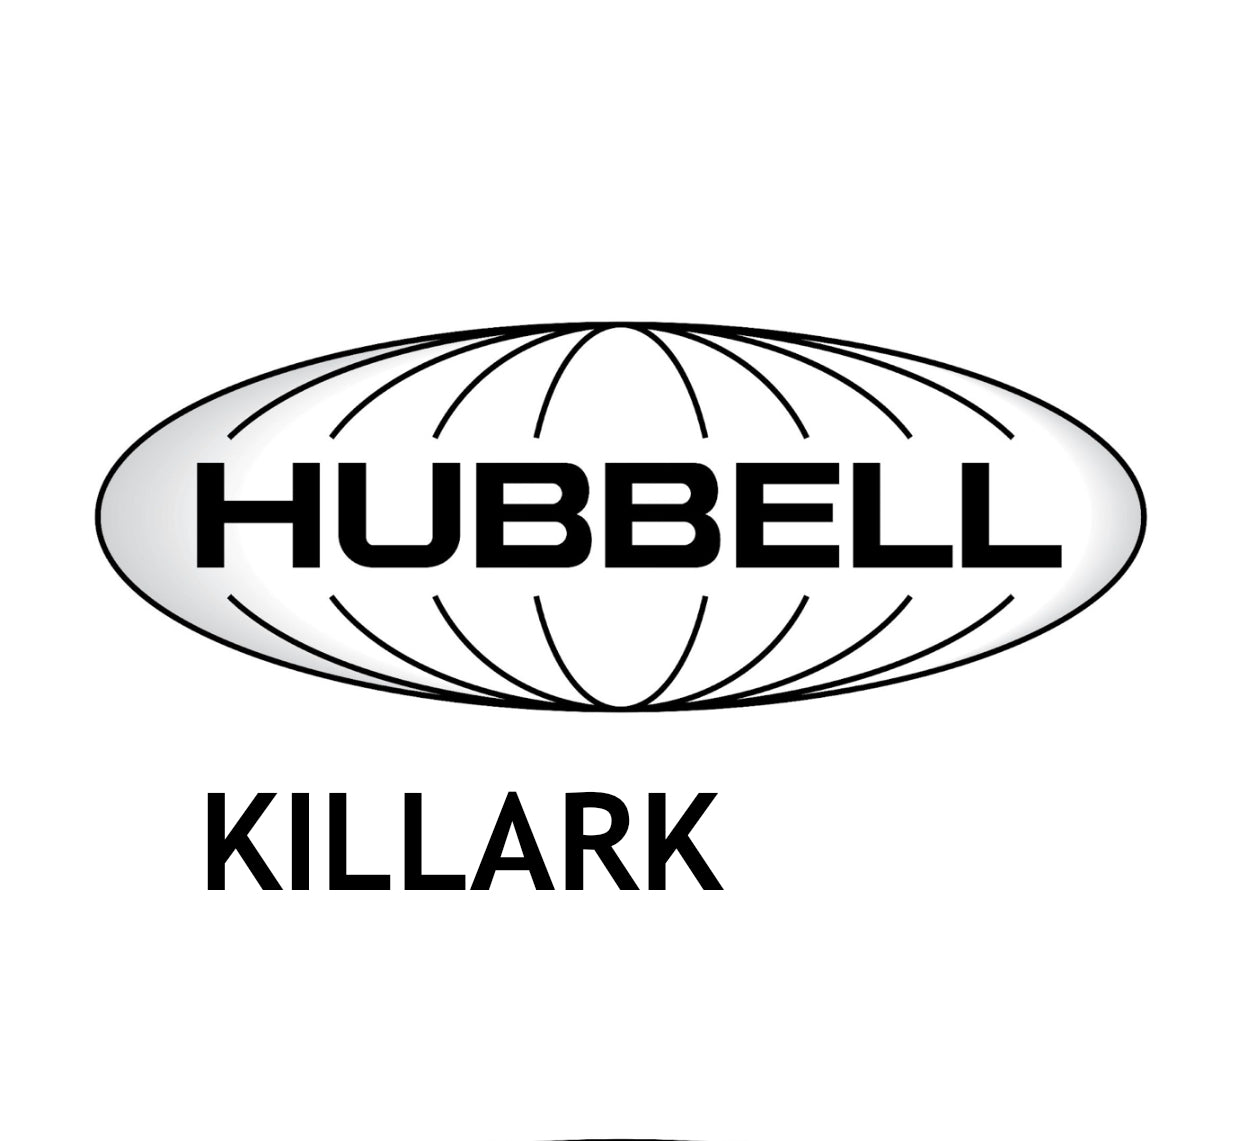 HUBBELL KILLARK